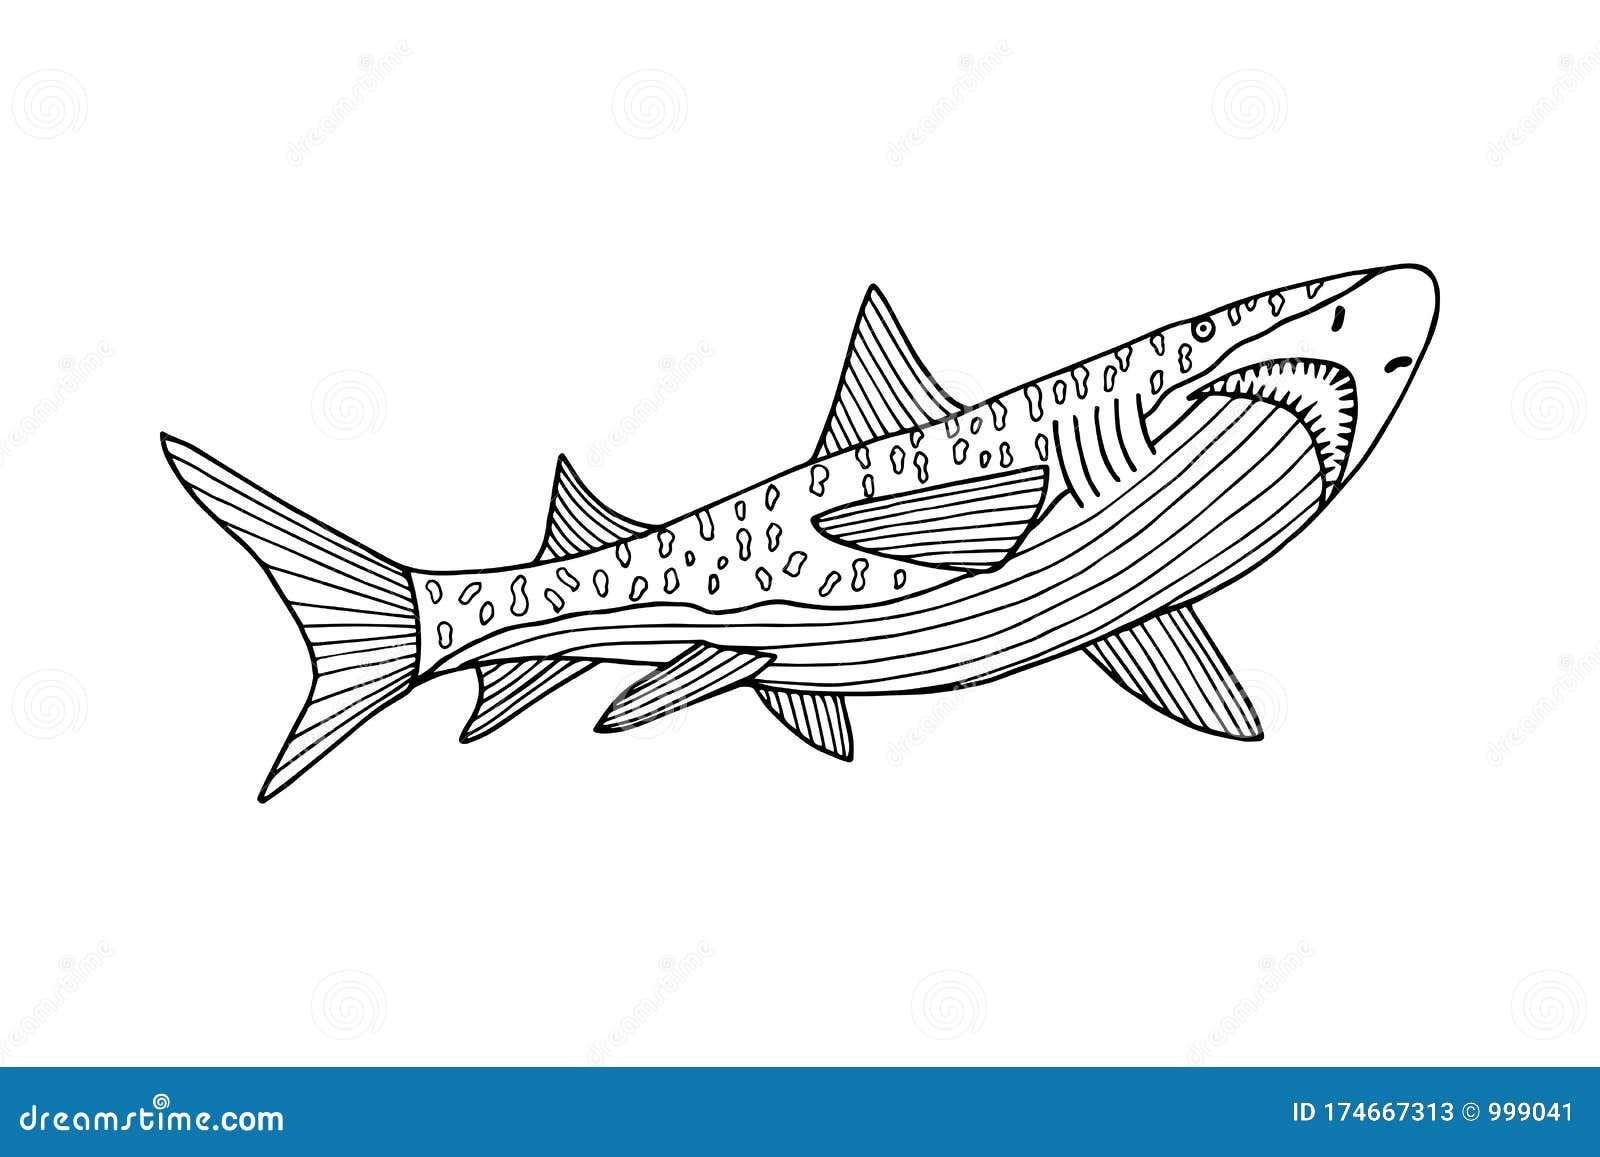 Shark coloring book stock illustrations â shark coloring book stock illustrations vectors clipart